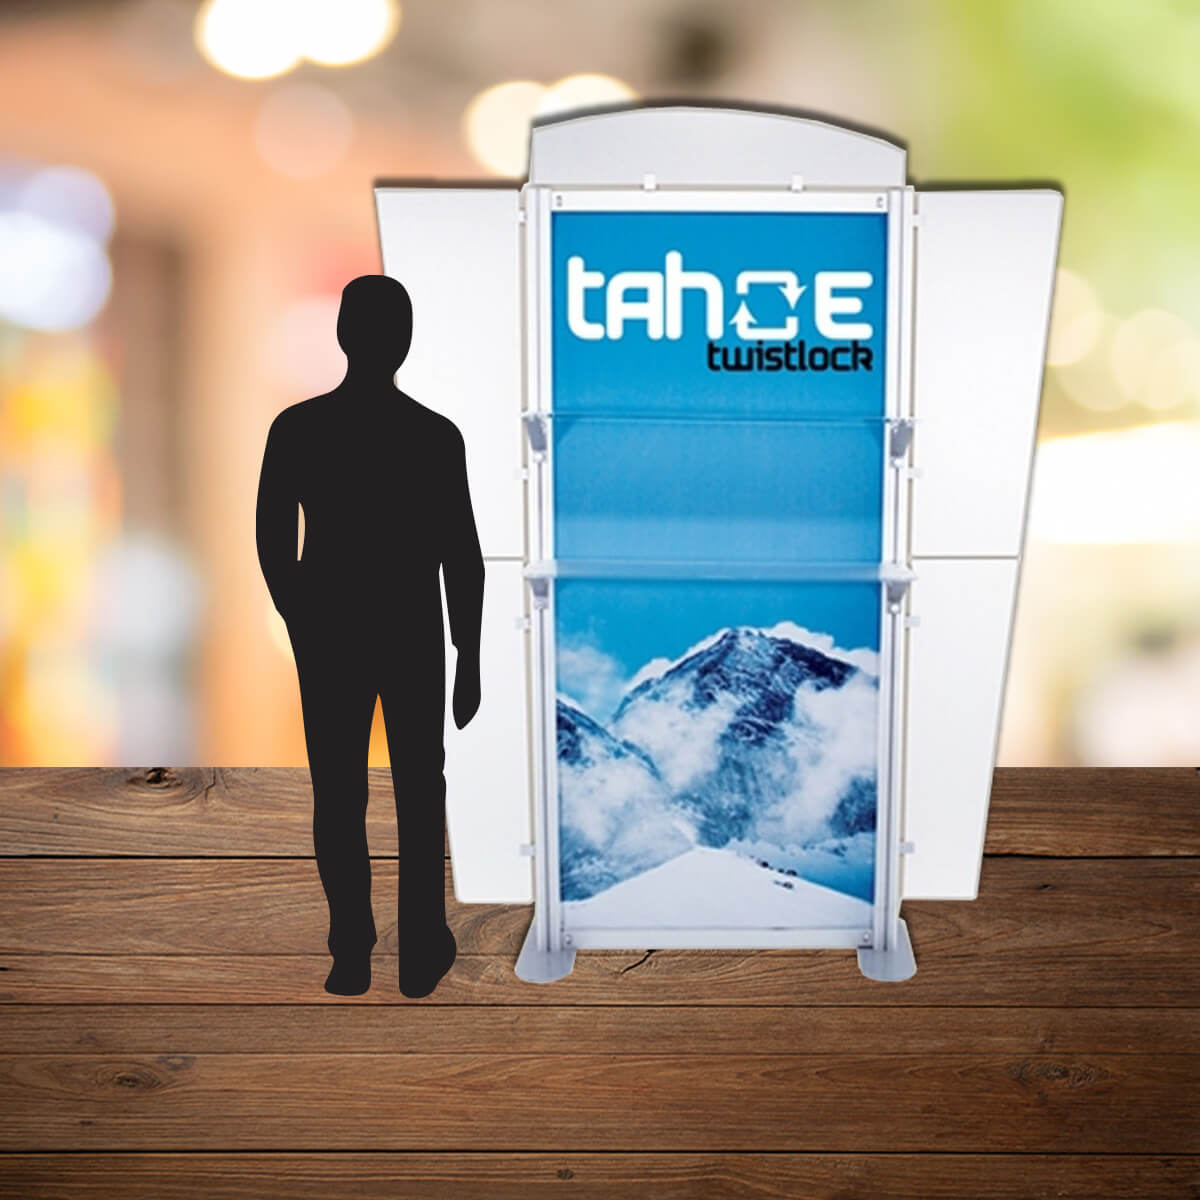 Tahoe twistlock small rigid display exhibit trade show display by Curative Printing